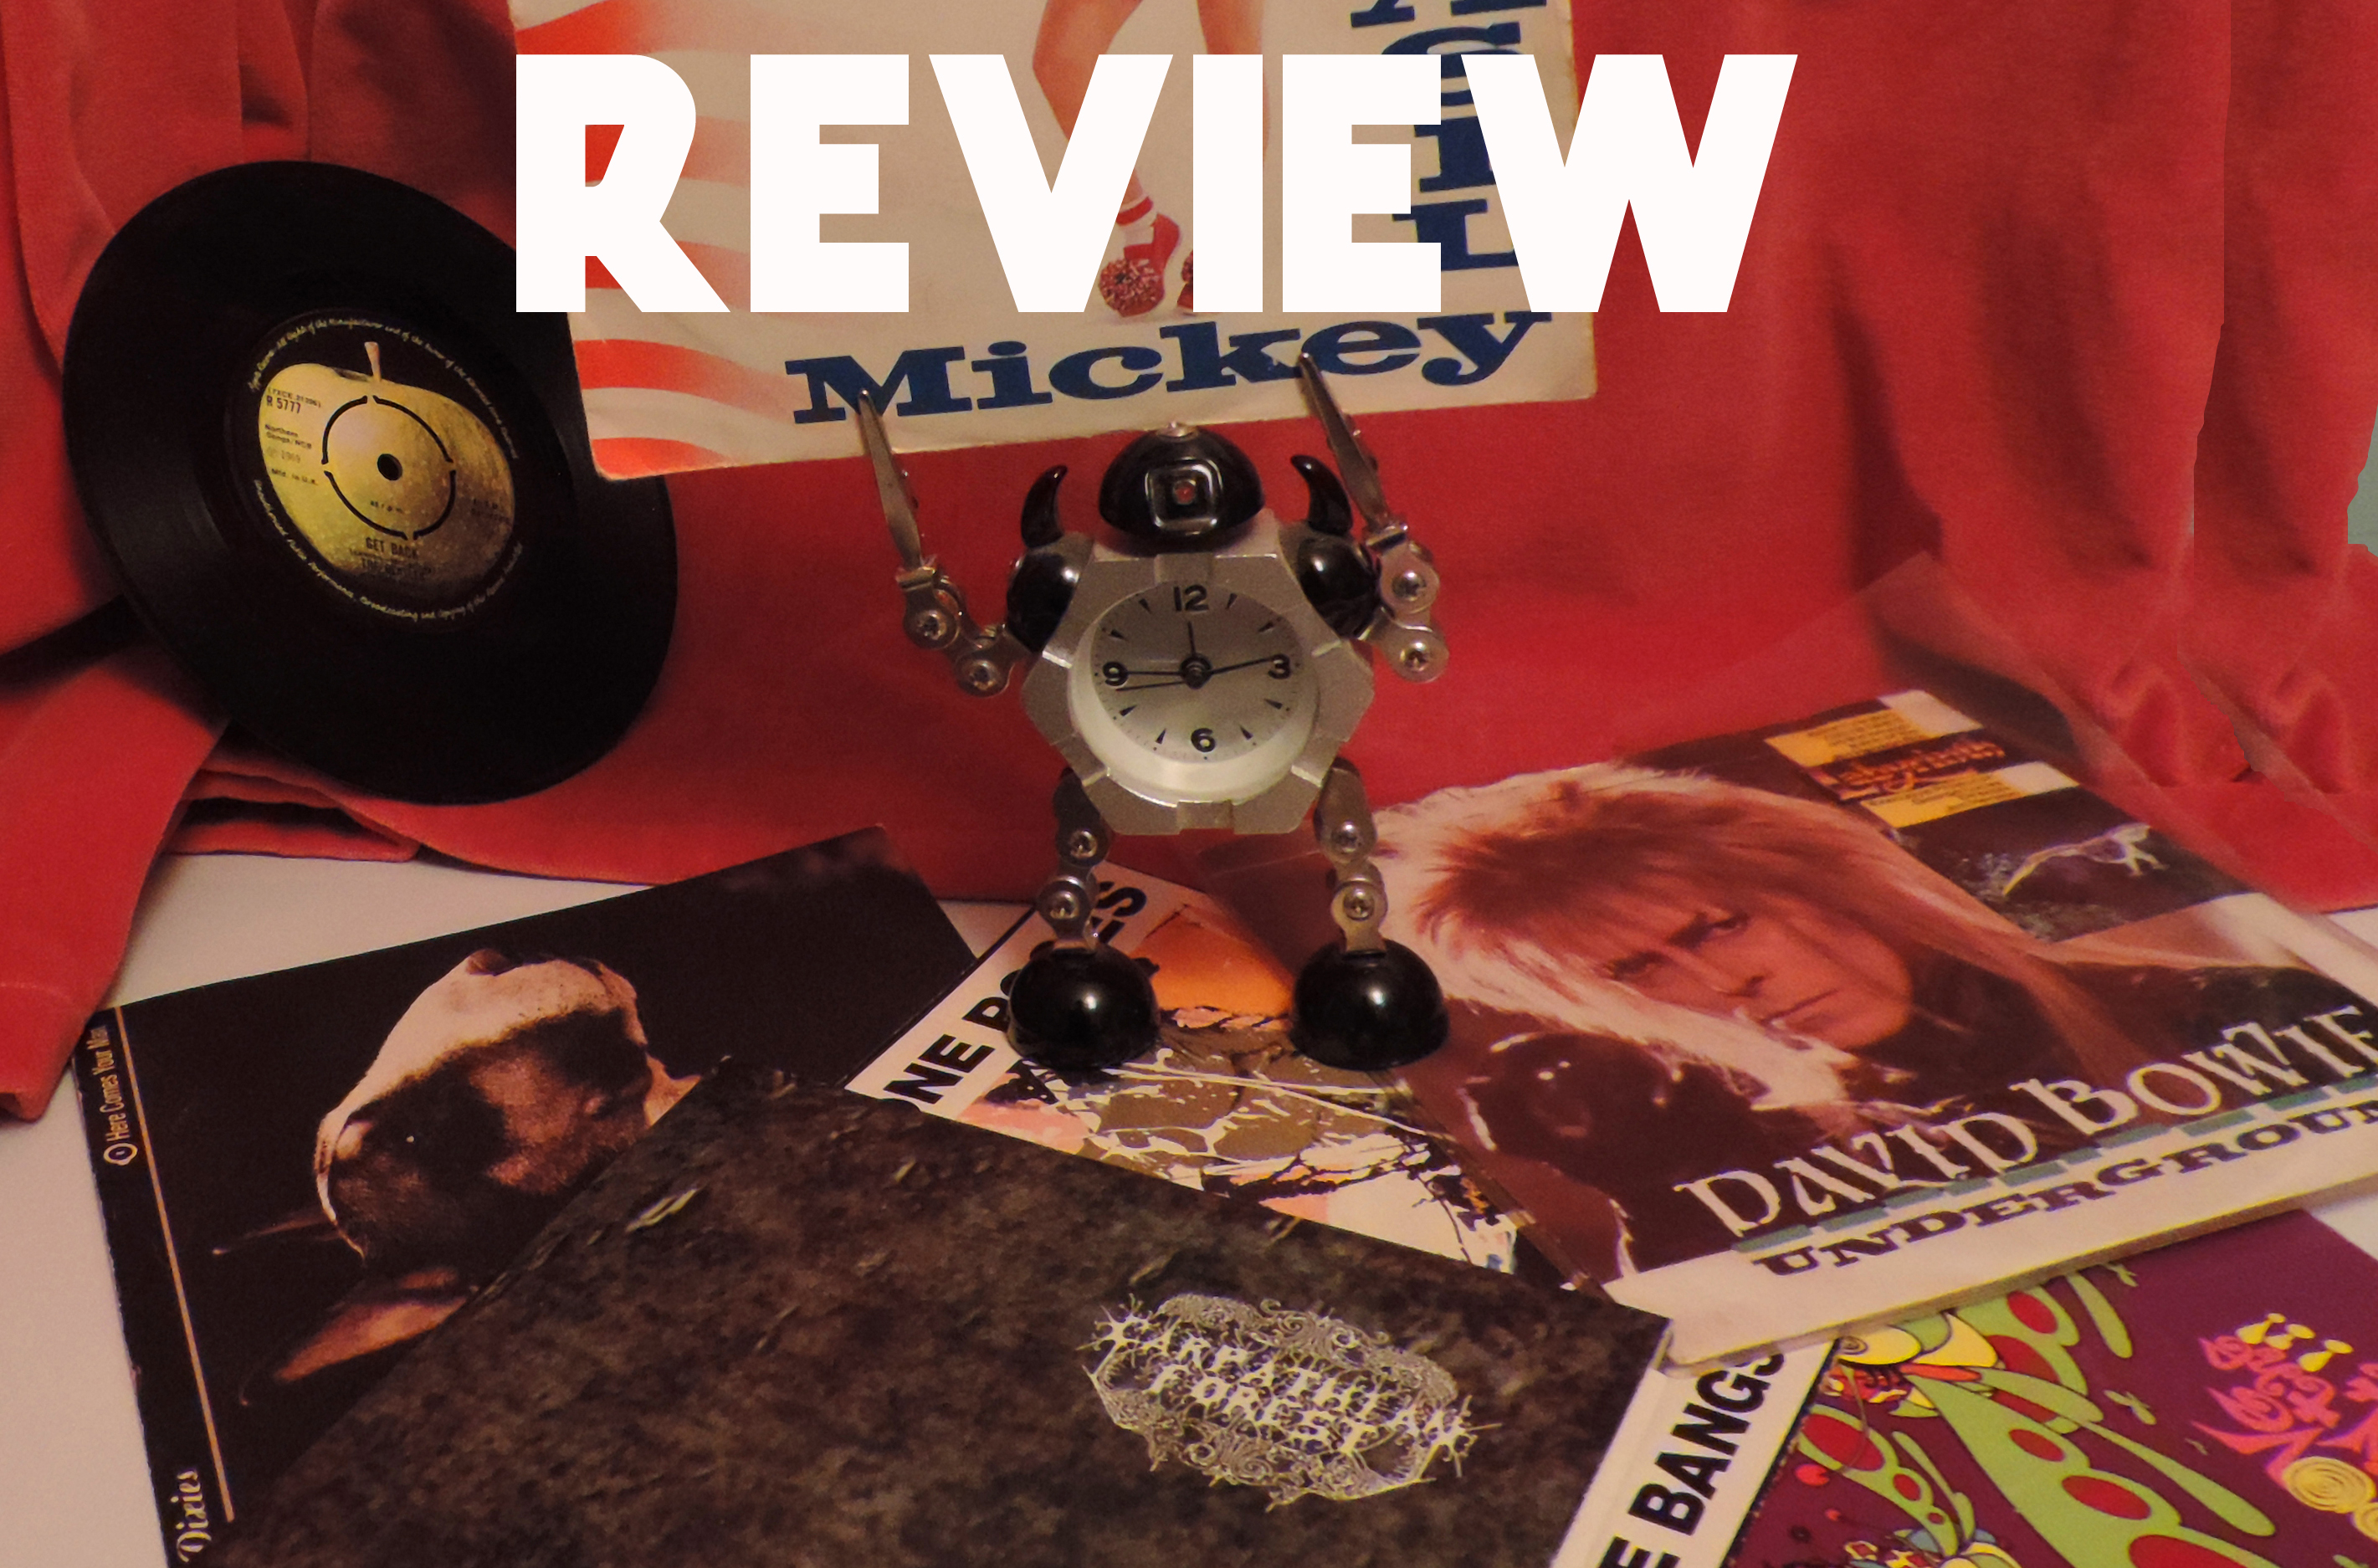 Album Review: Rachel Mason – Das Ram